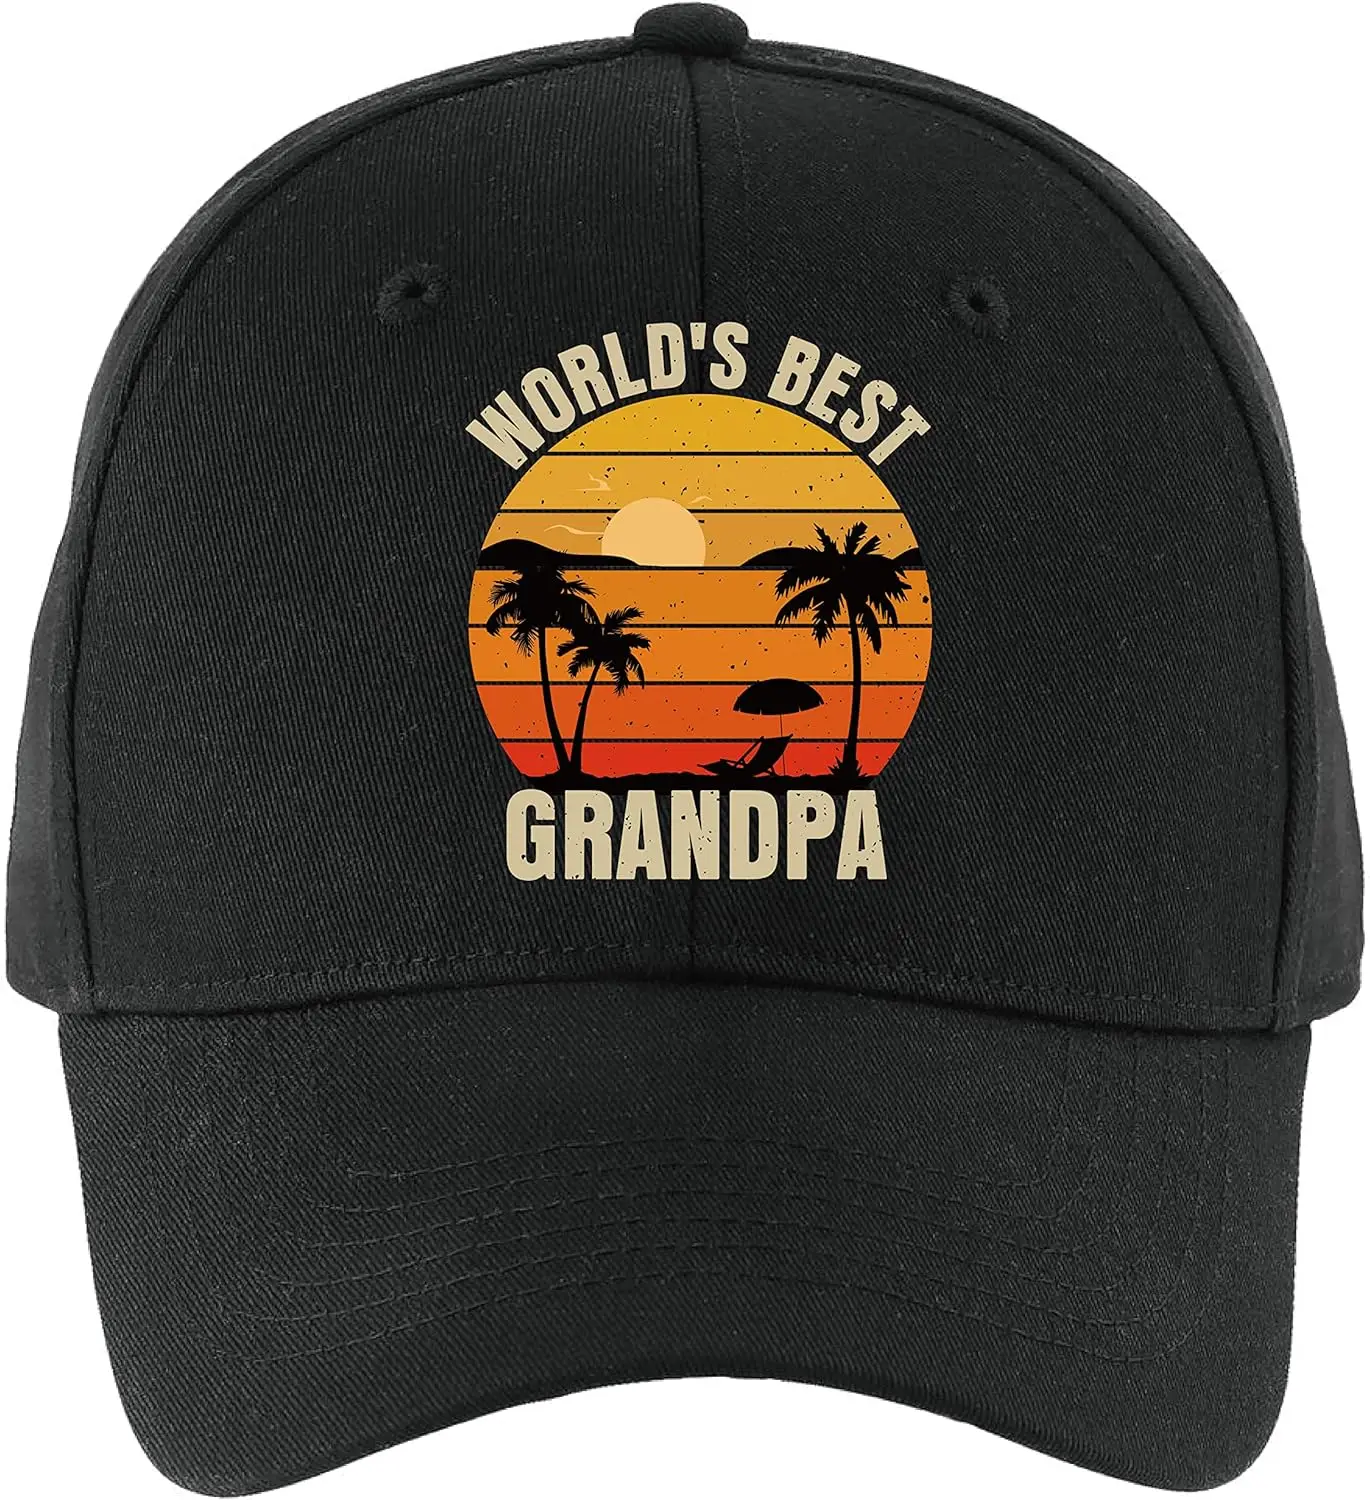 

World's Best Grandpa Baseball Hat, Adjustable Vintage Cotton Cap, Retirement Gifts for Grandpa Dad, for Grandpa Dad Husband